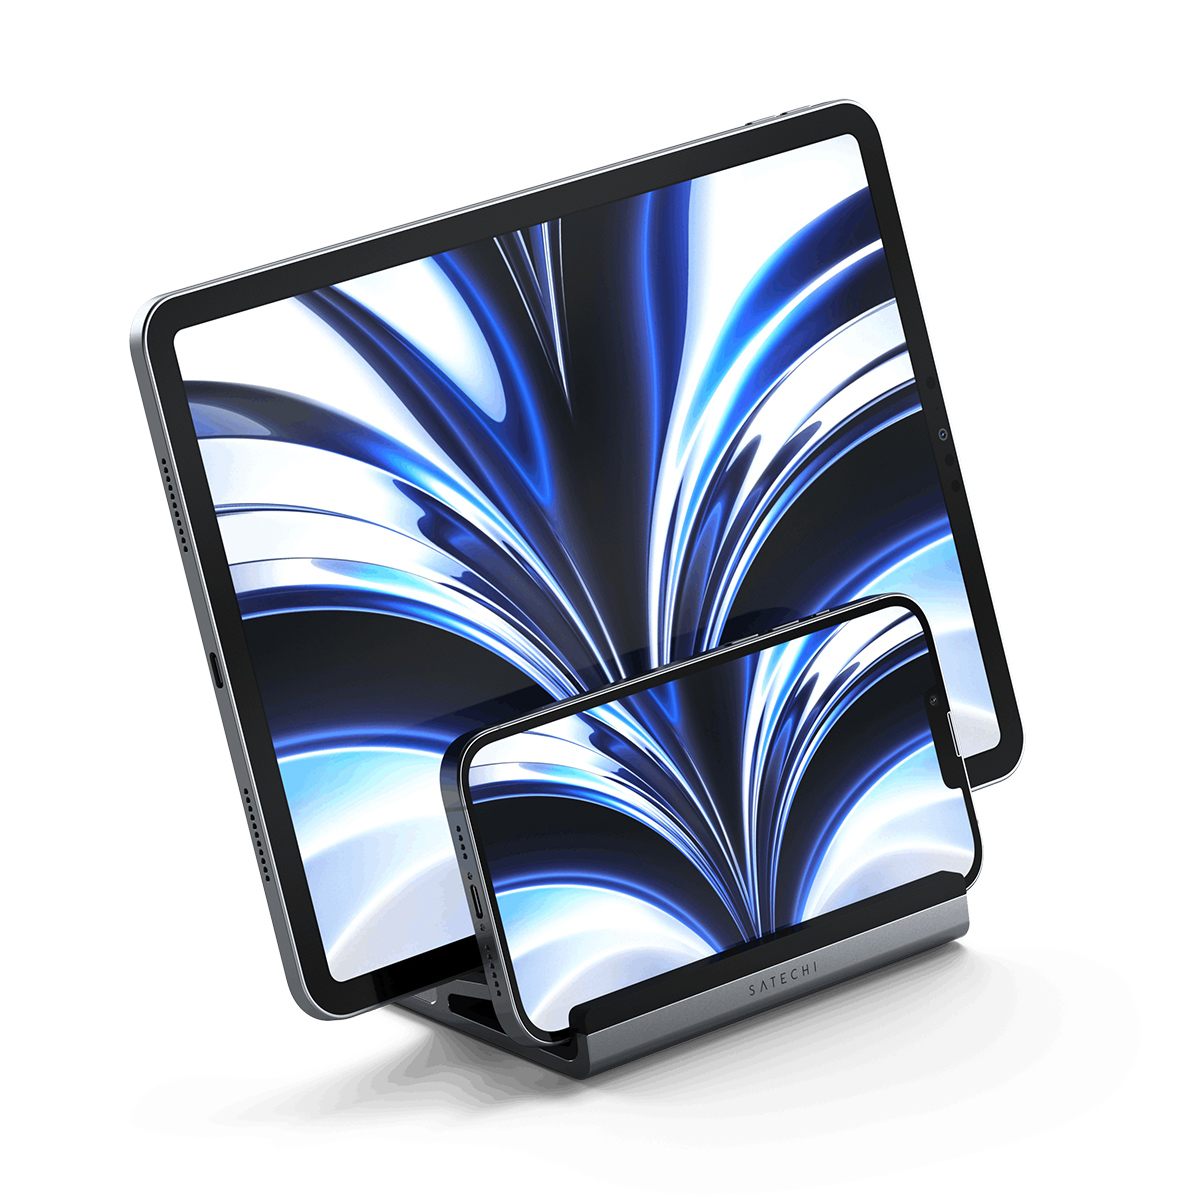 Giá đỡ MacBook Satechi Dual Vertical Laptop Stand